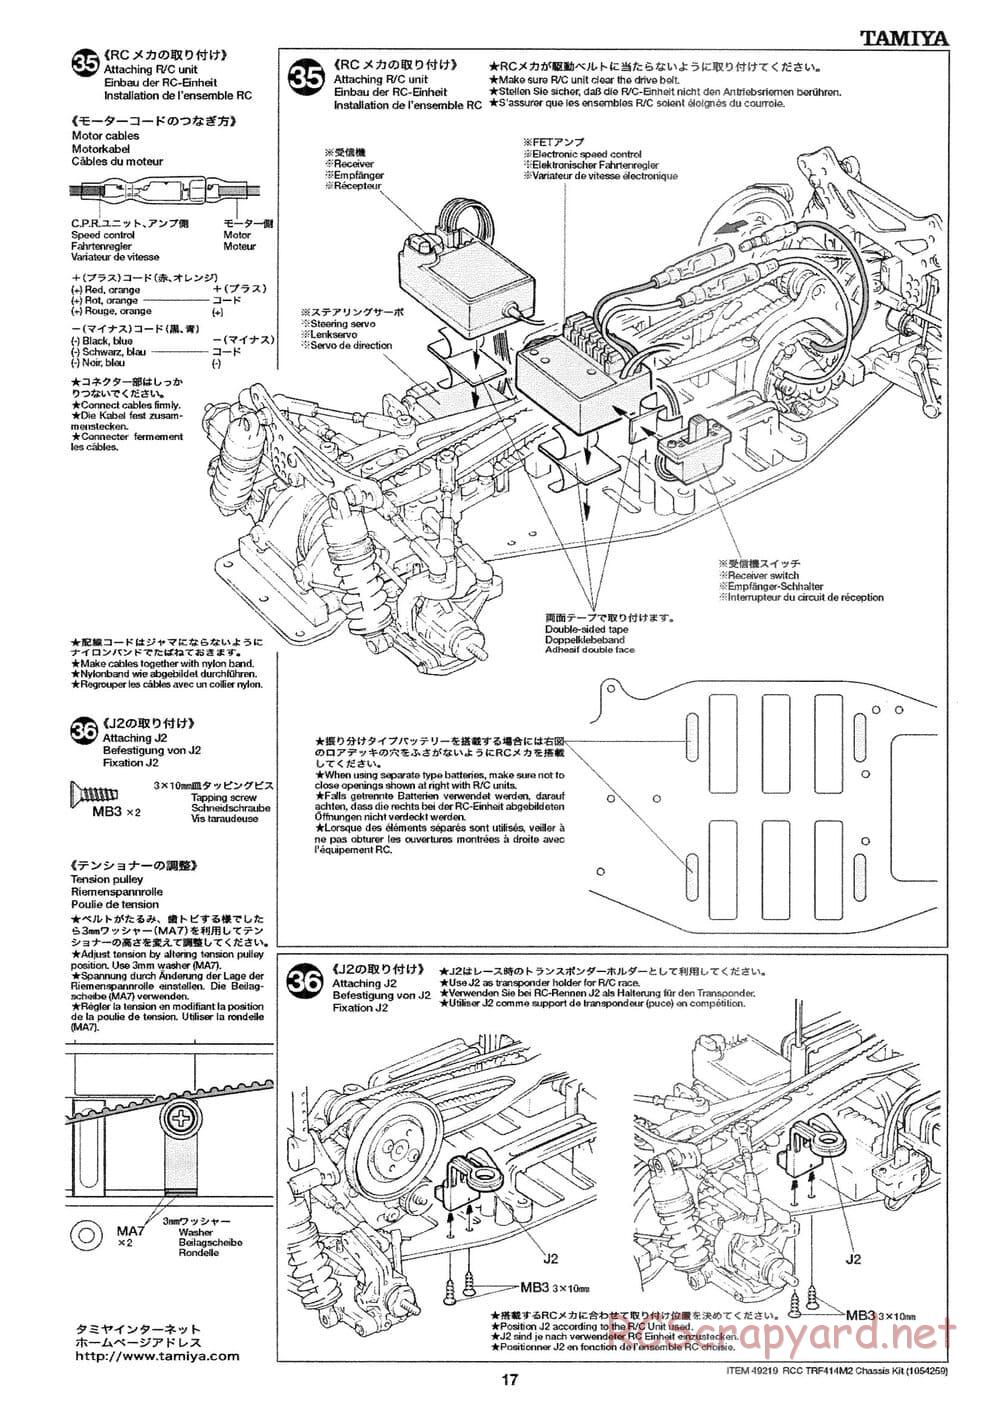 Tamiya - TRF414M II Chassis - Manual - Page 17